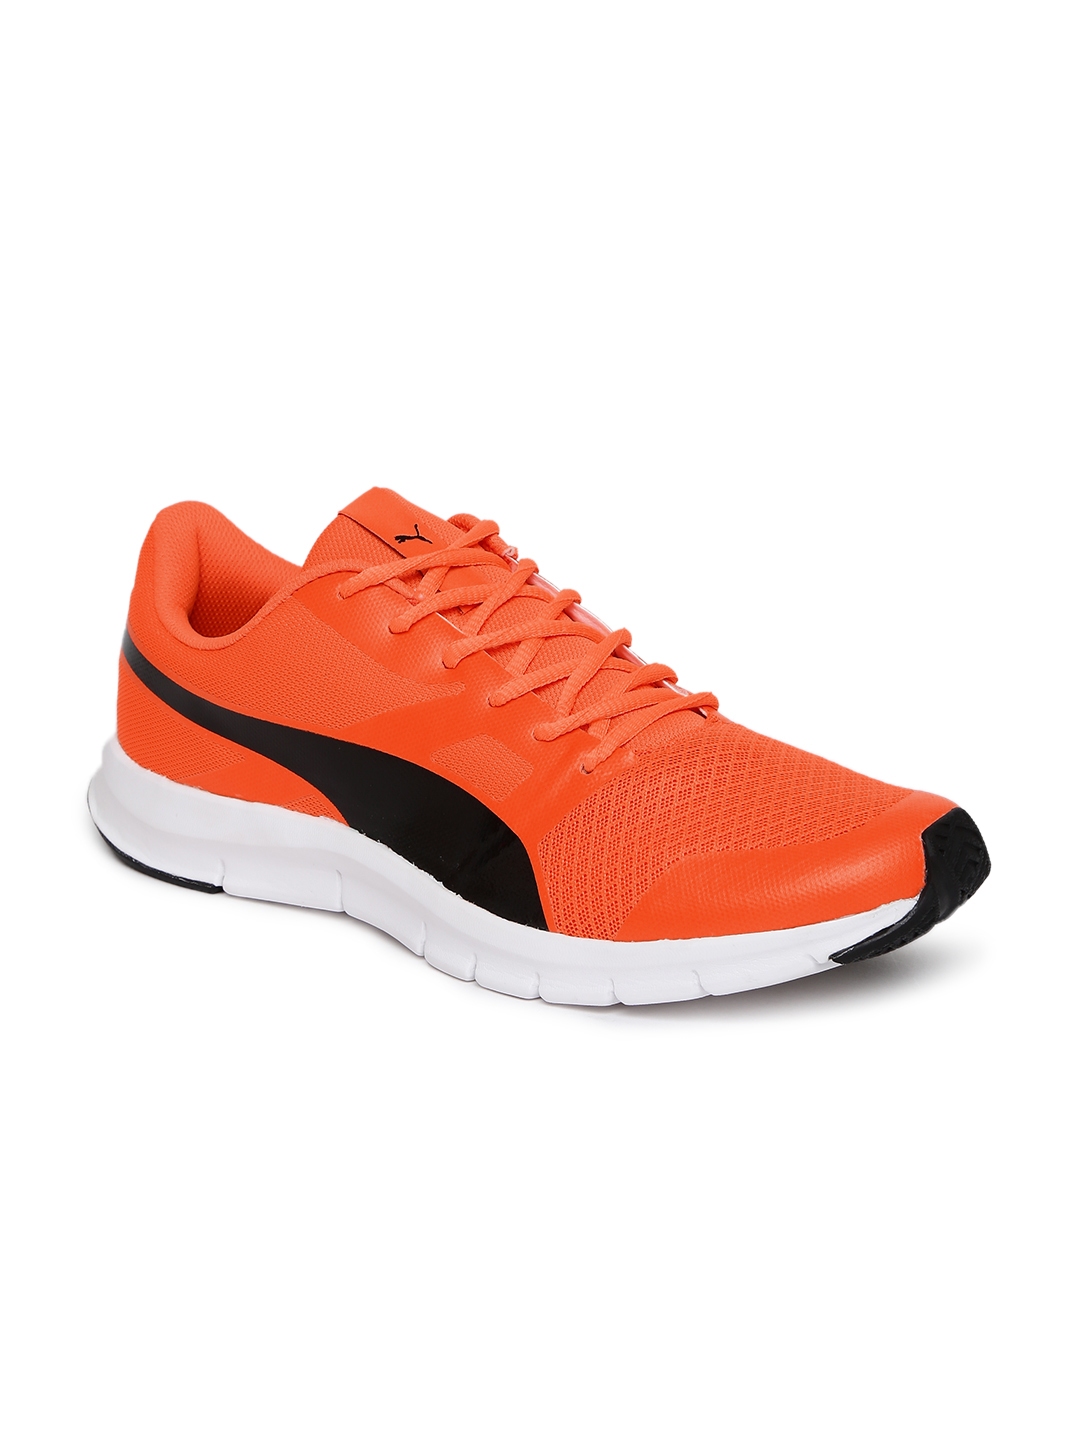 Buy Puma Men Orange Sneakers - Casual Shoes for Men 2253050 | Myntra